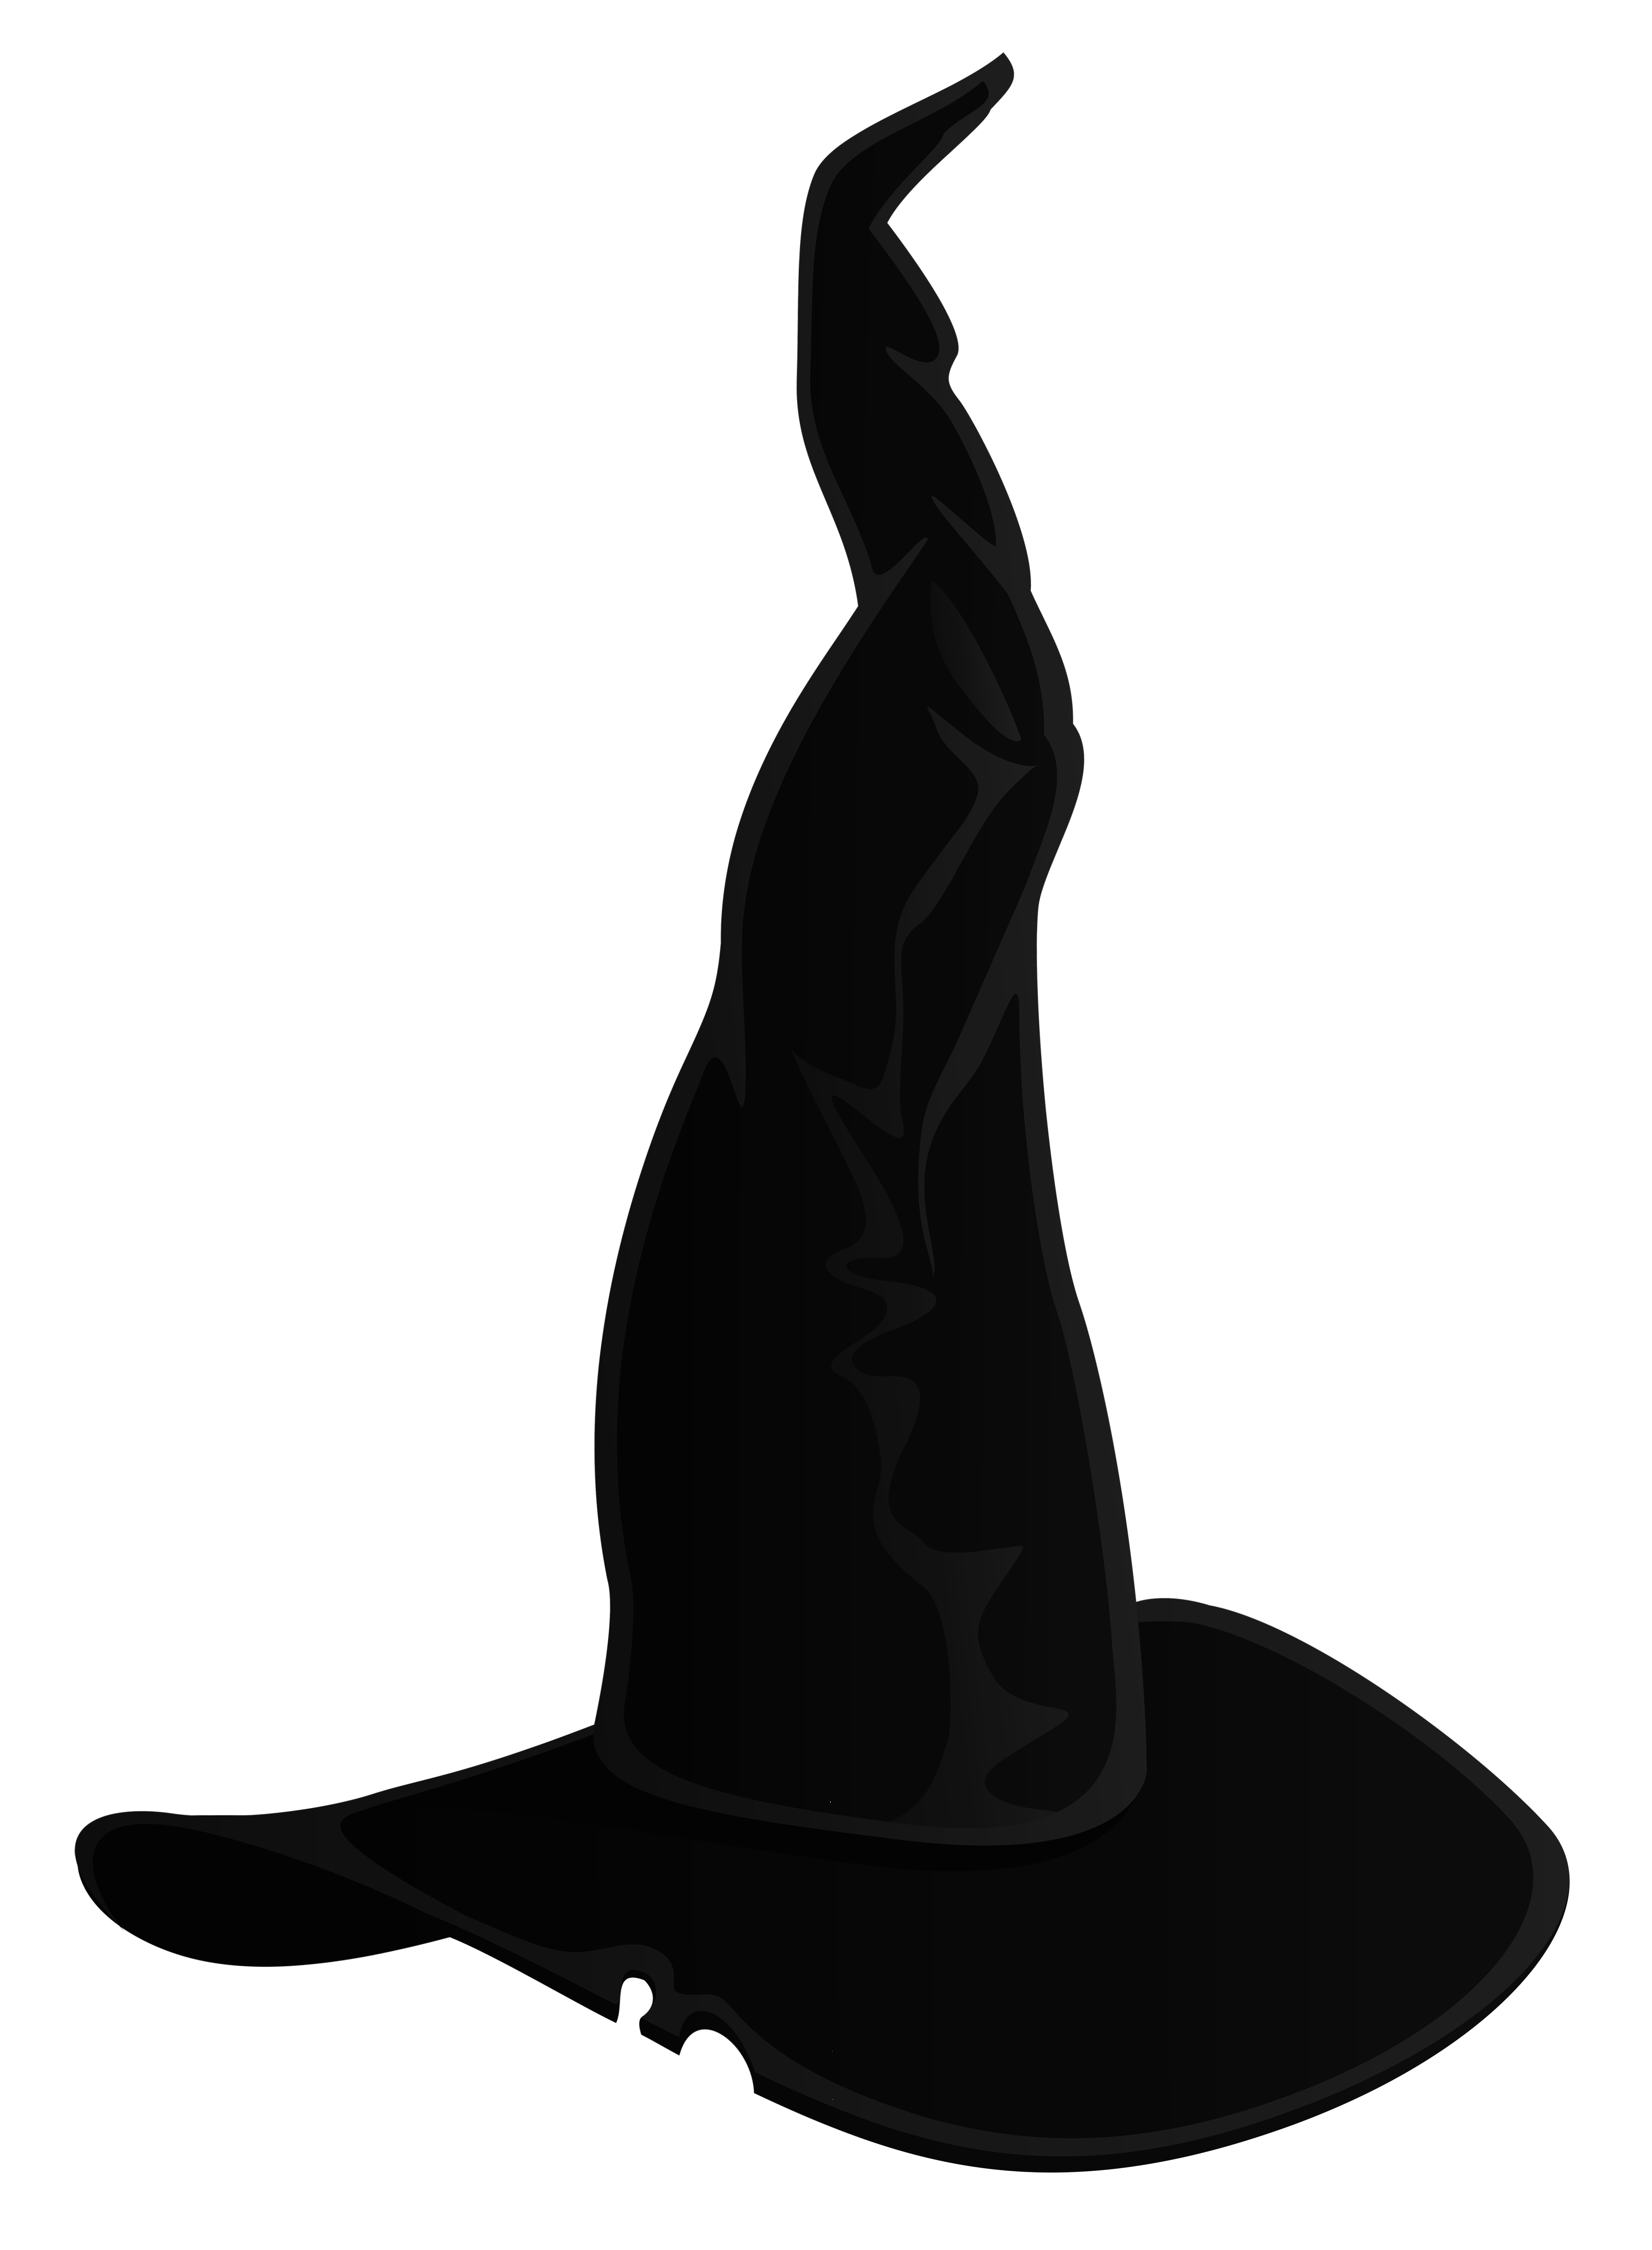 Large Black Witch Hat Transparent PNG Clipart